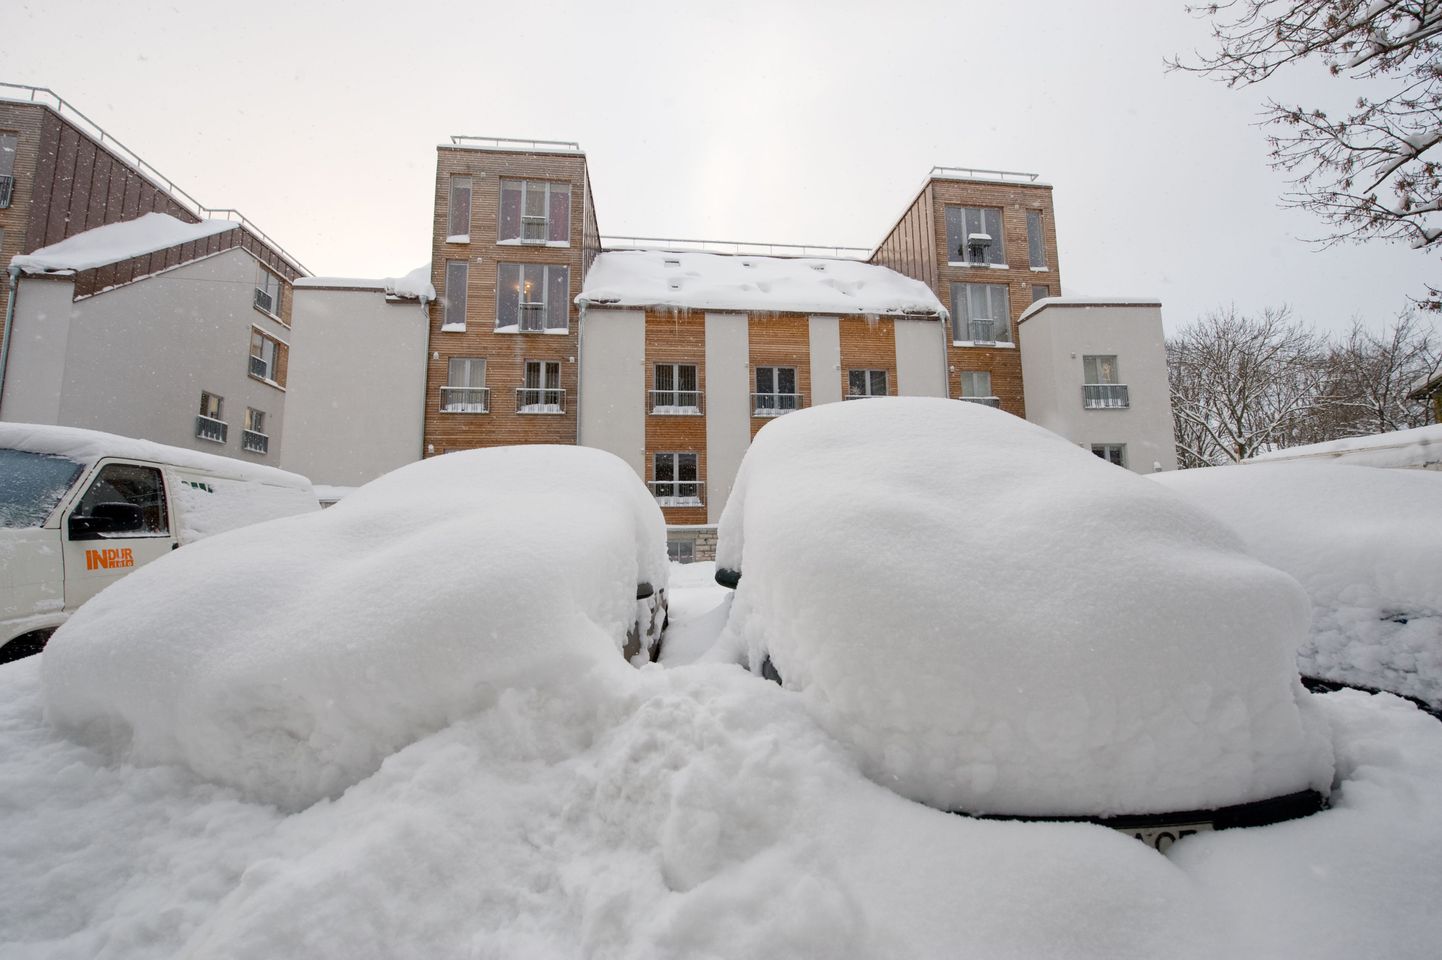 Lume alla mattunud autod Tallinna kesklinnas.